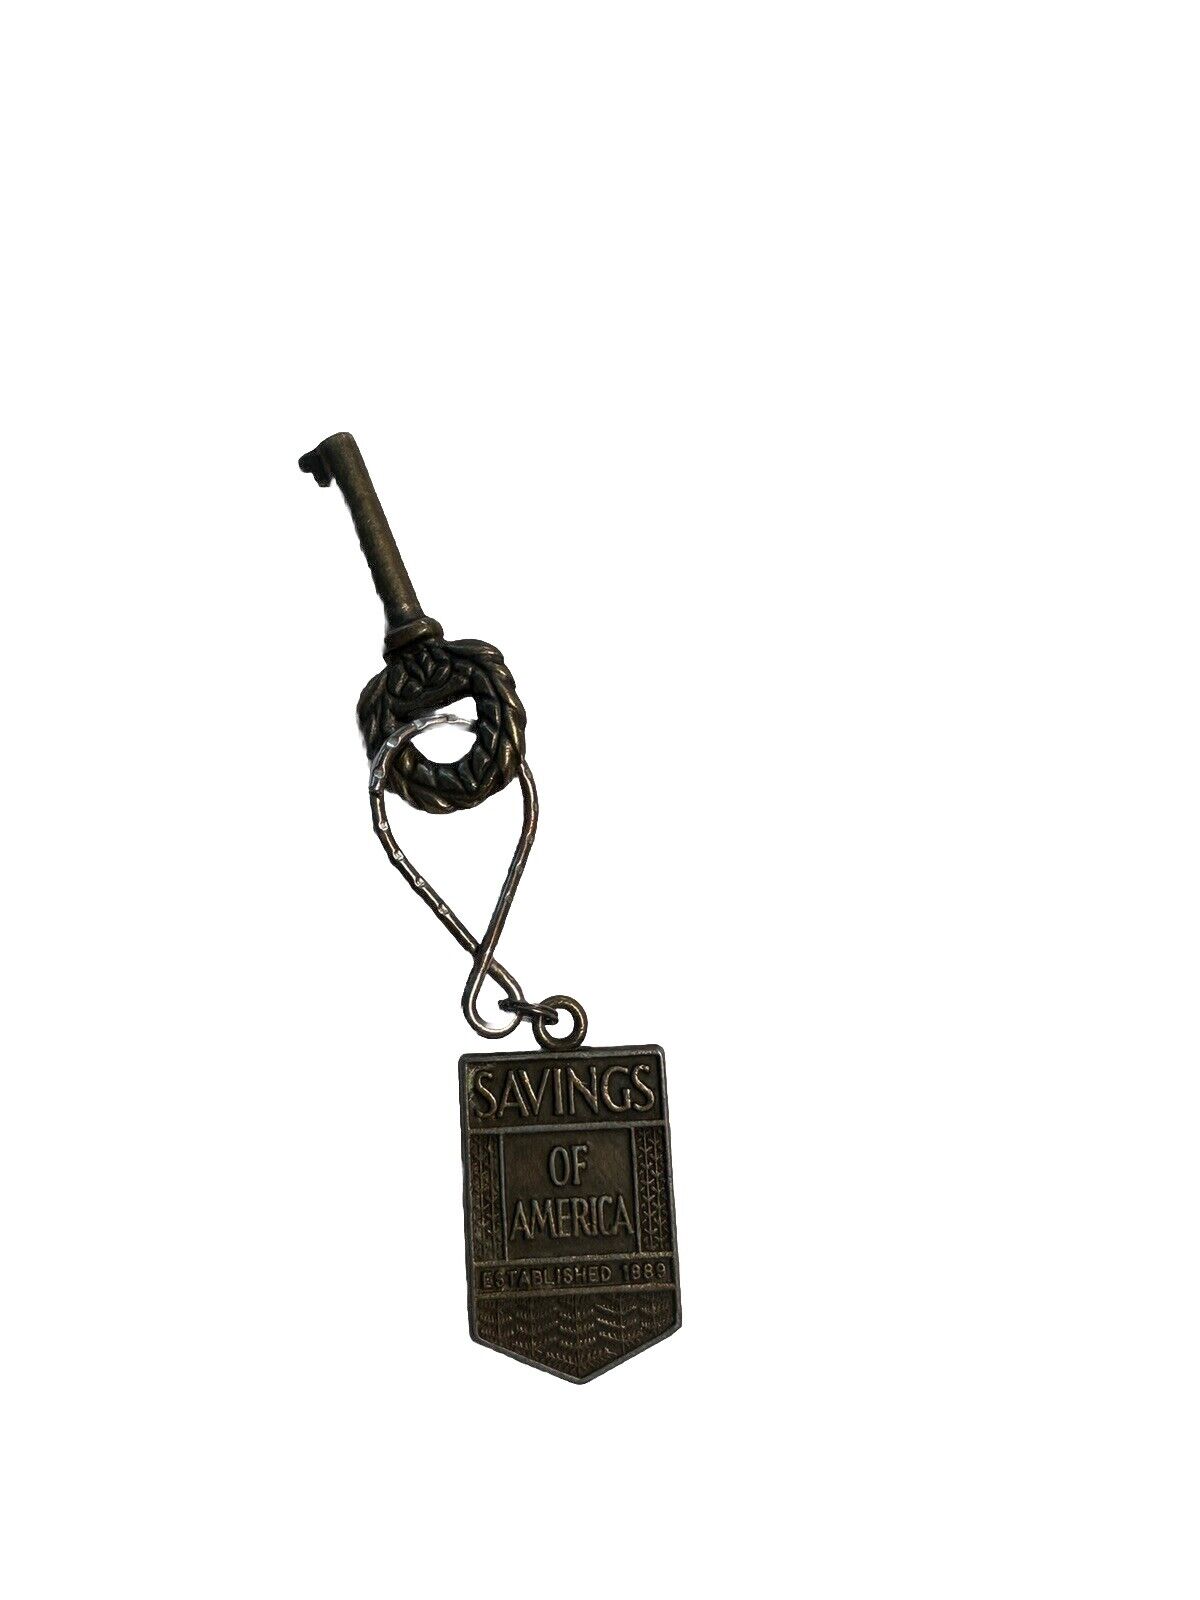 Savings Of America, Established 1899 Key Fob And Vintage Key